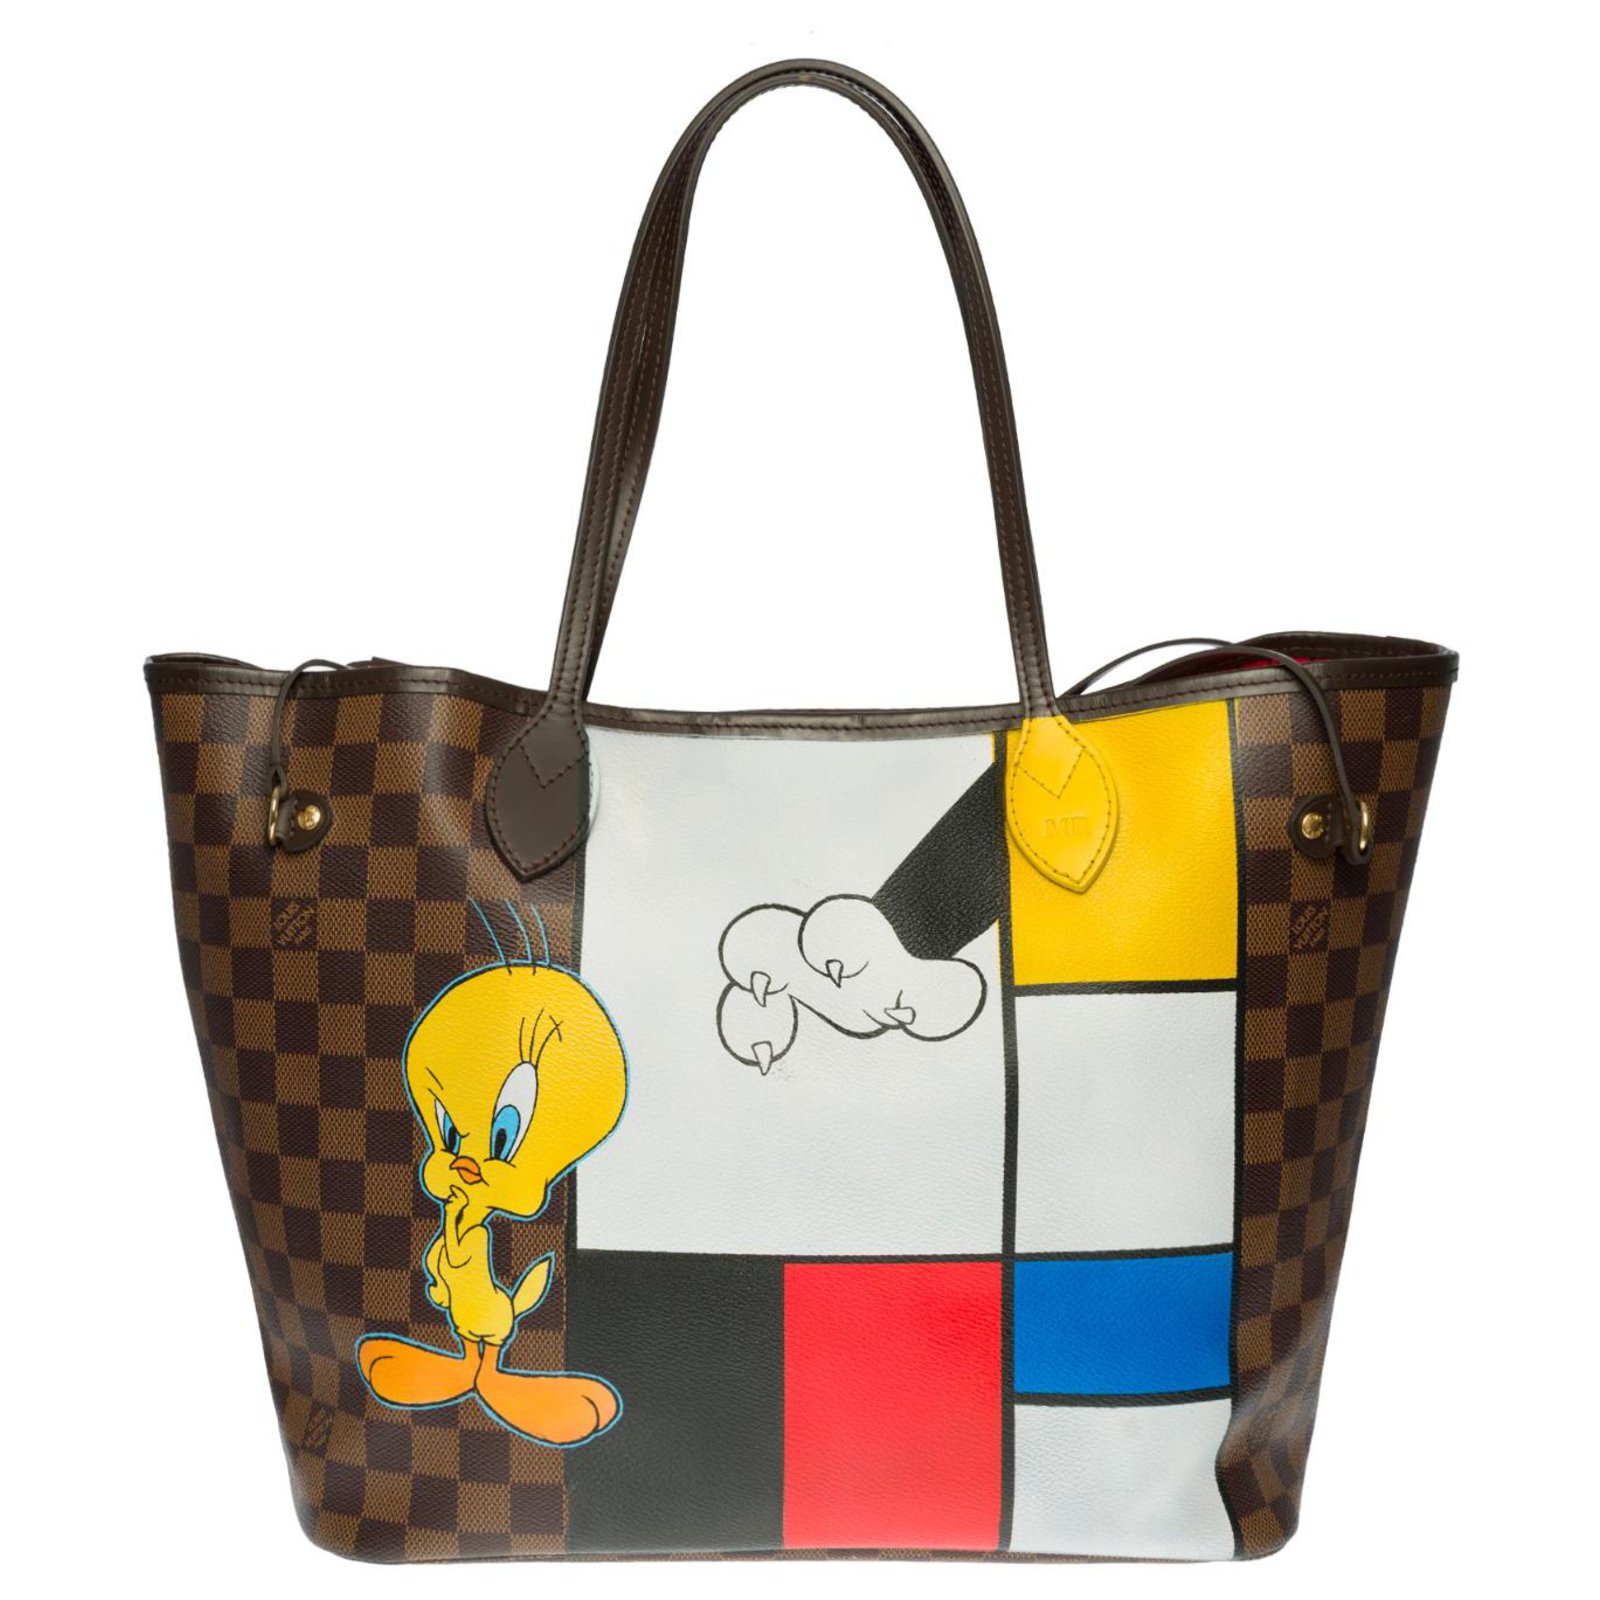 Splendid Louis Vuitton Neverfull MM tote bag with ebony